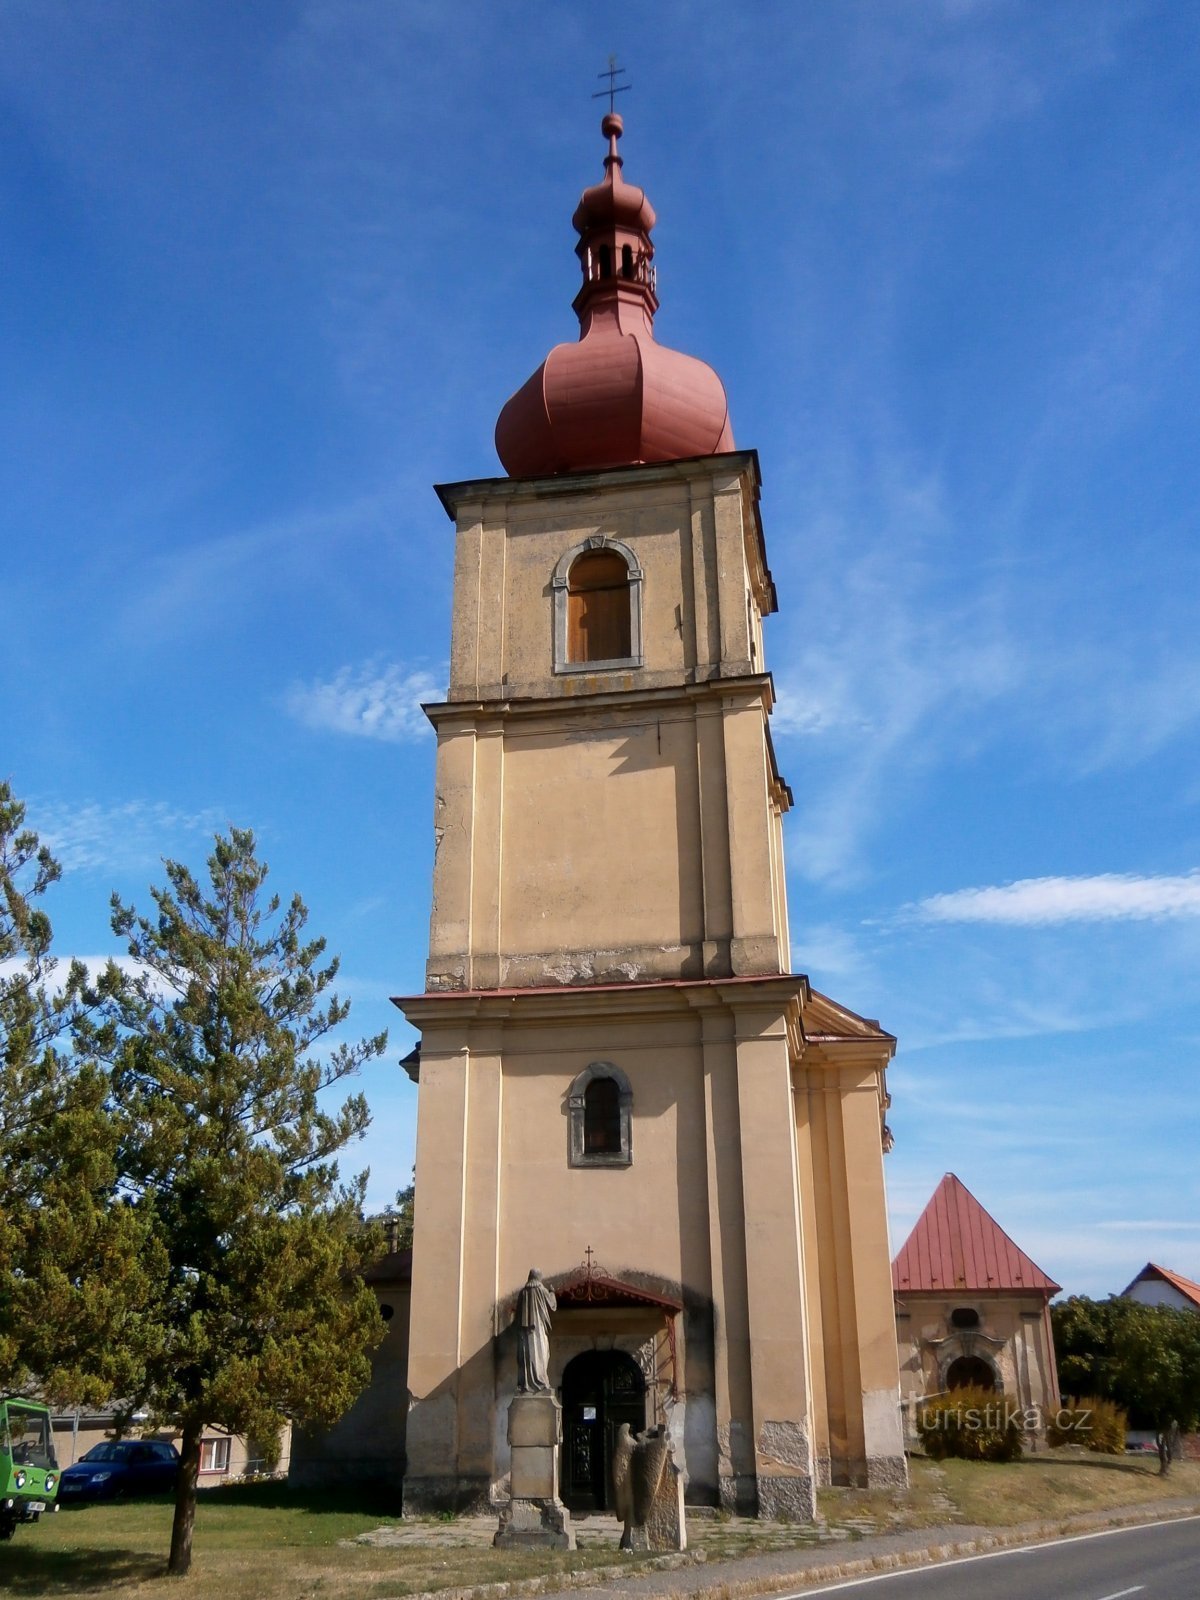 Cerkev sv. Jiljí, opat (Chvalkovice)